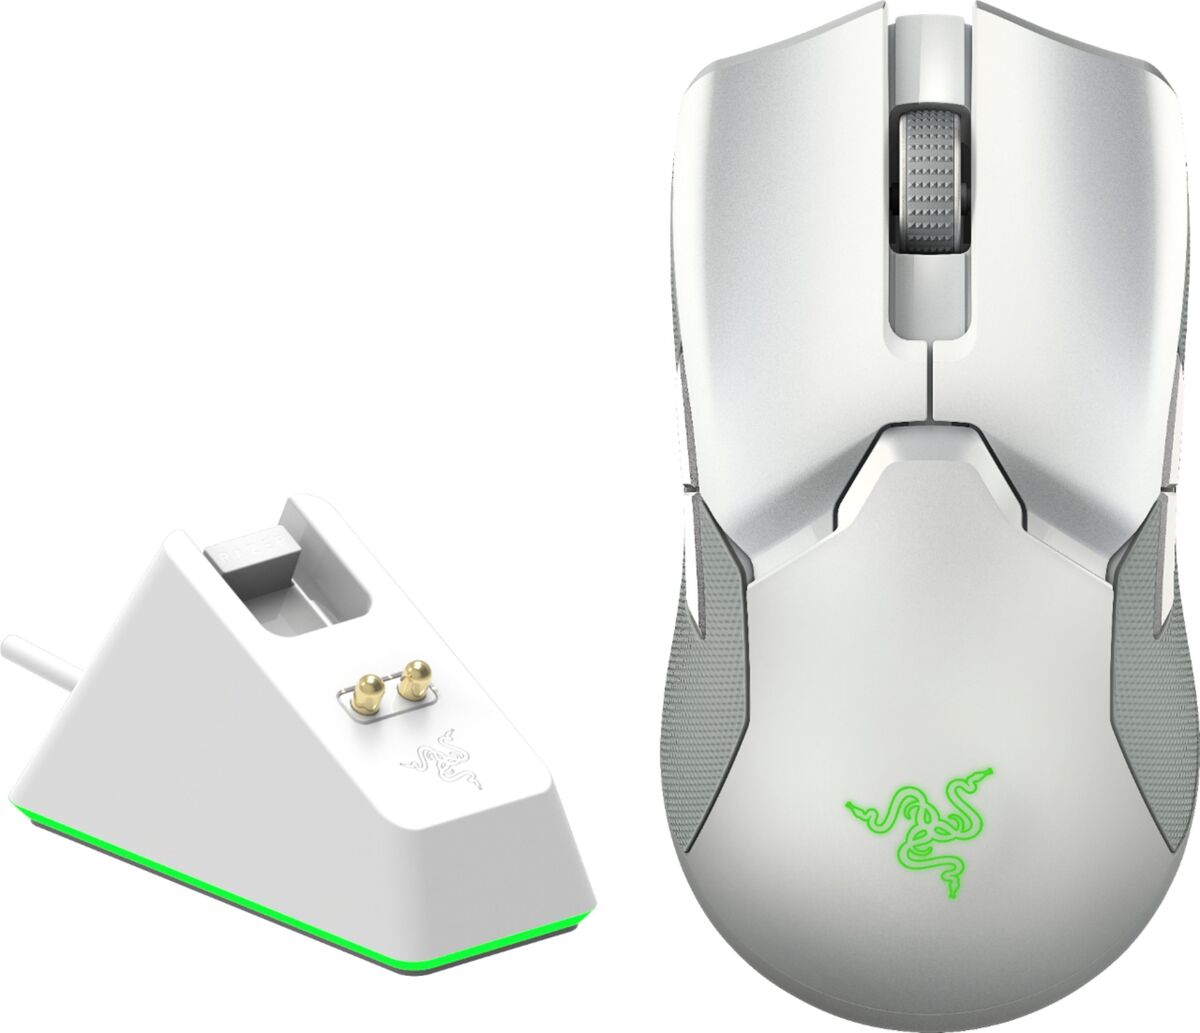 Razer Viper Ultimate gaming mouse